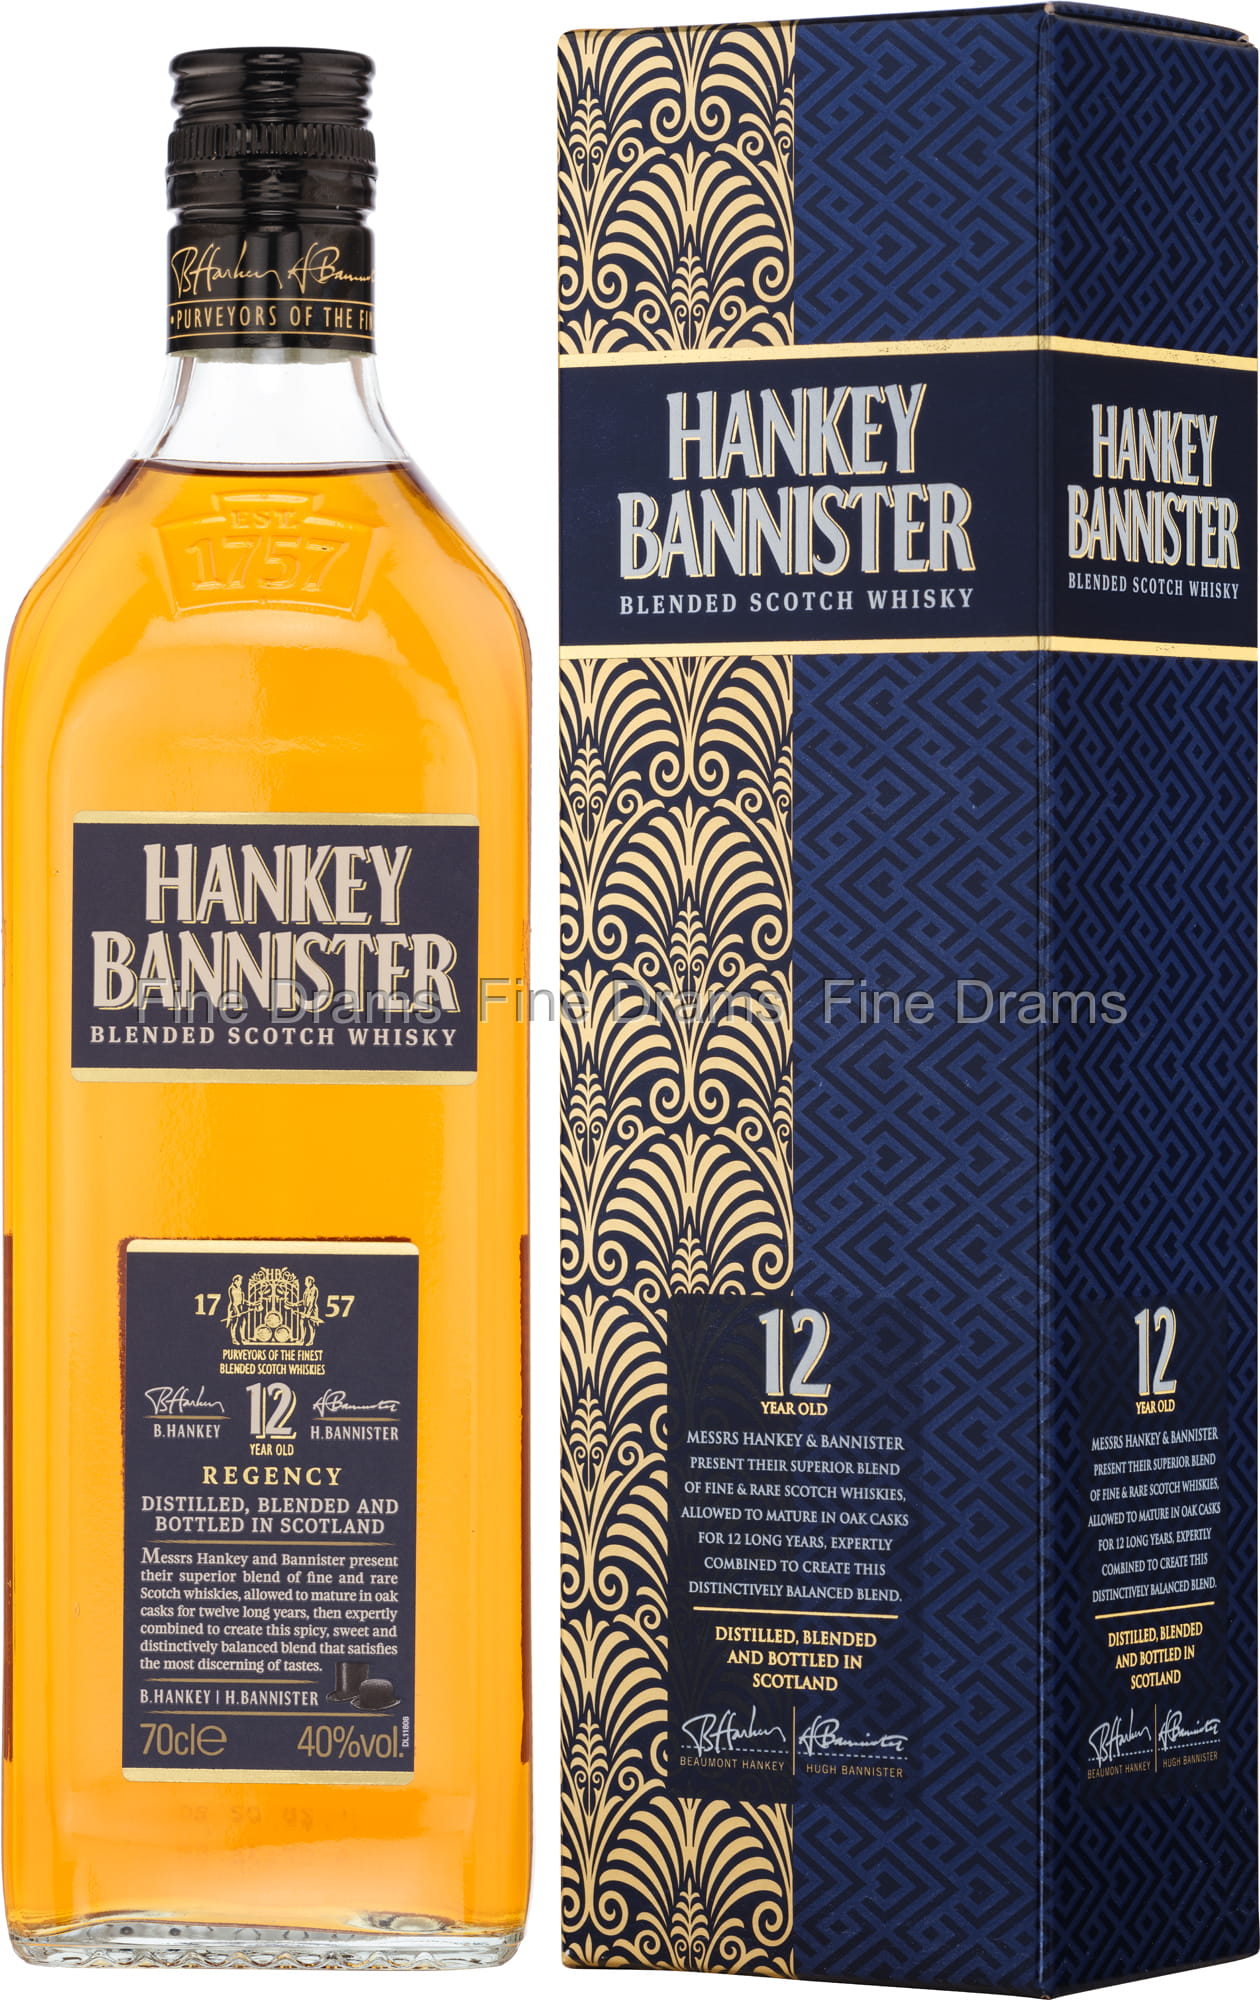 Ханки баннистер. Виски Хенкель Баннистер. Ханки Баннистер виски. Виски Хайнекен Баннистер. Виски "Hankey Bannister" Original, 1 л.